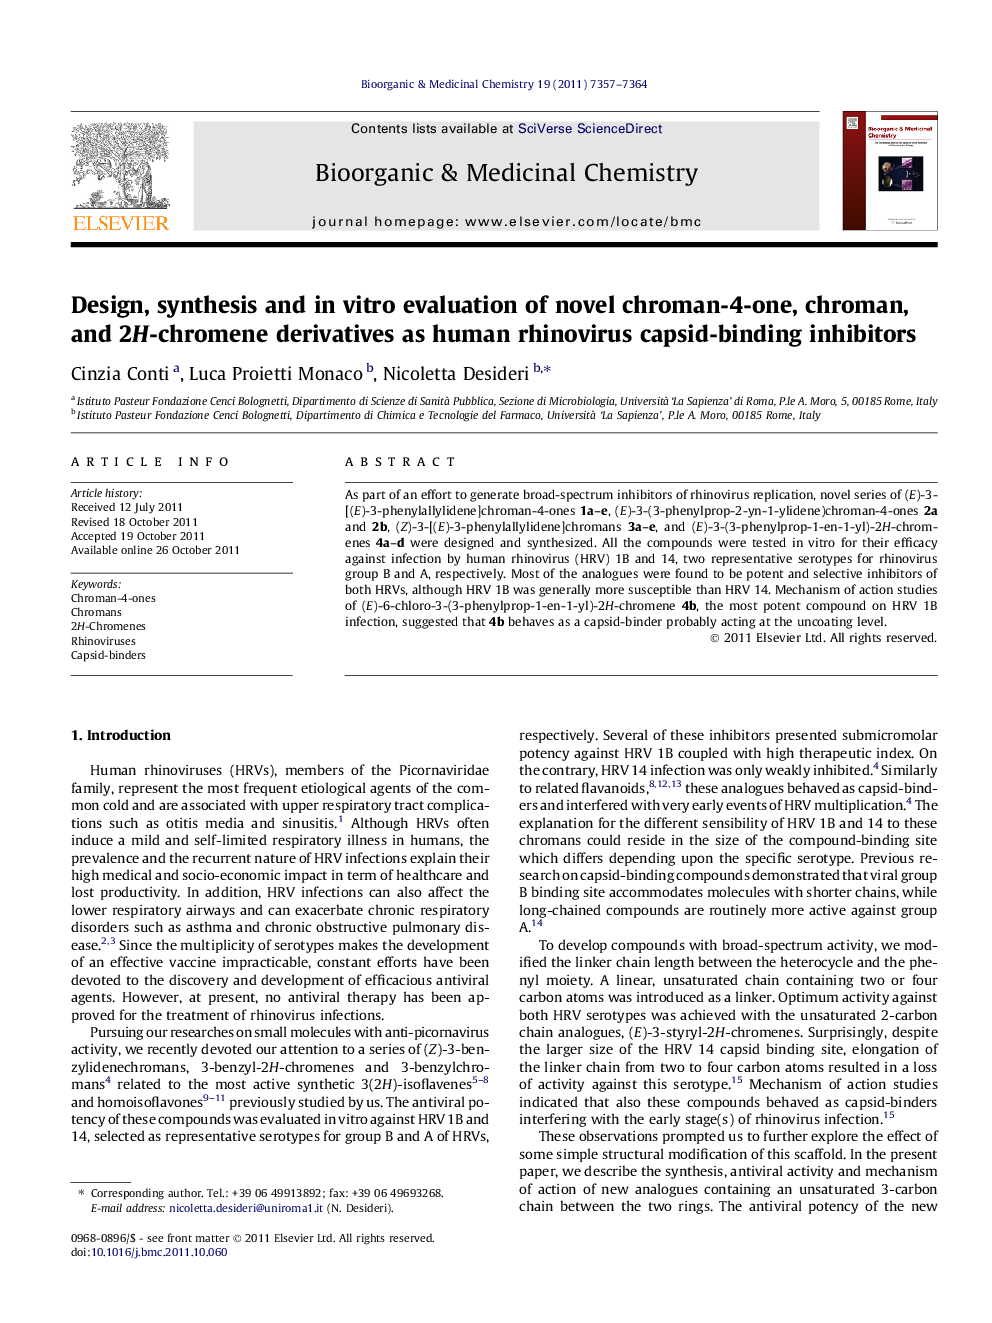 Design, synthesis and in vitro evaluation of novel chroman-4-one, chroman, and 2H-chromene derivatives as human rhinovirus capsid-binding inhibitors